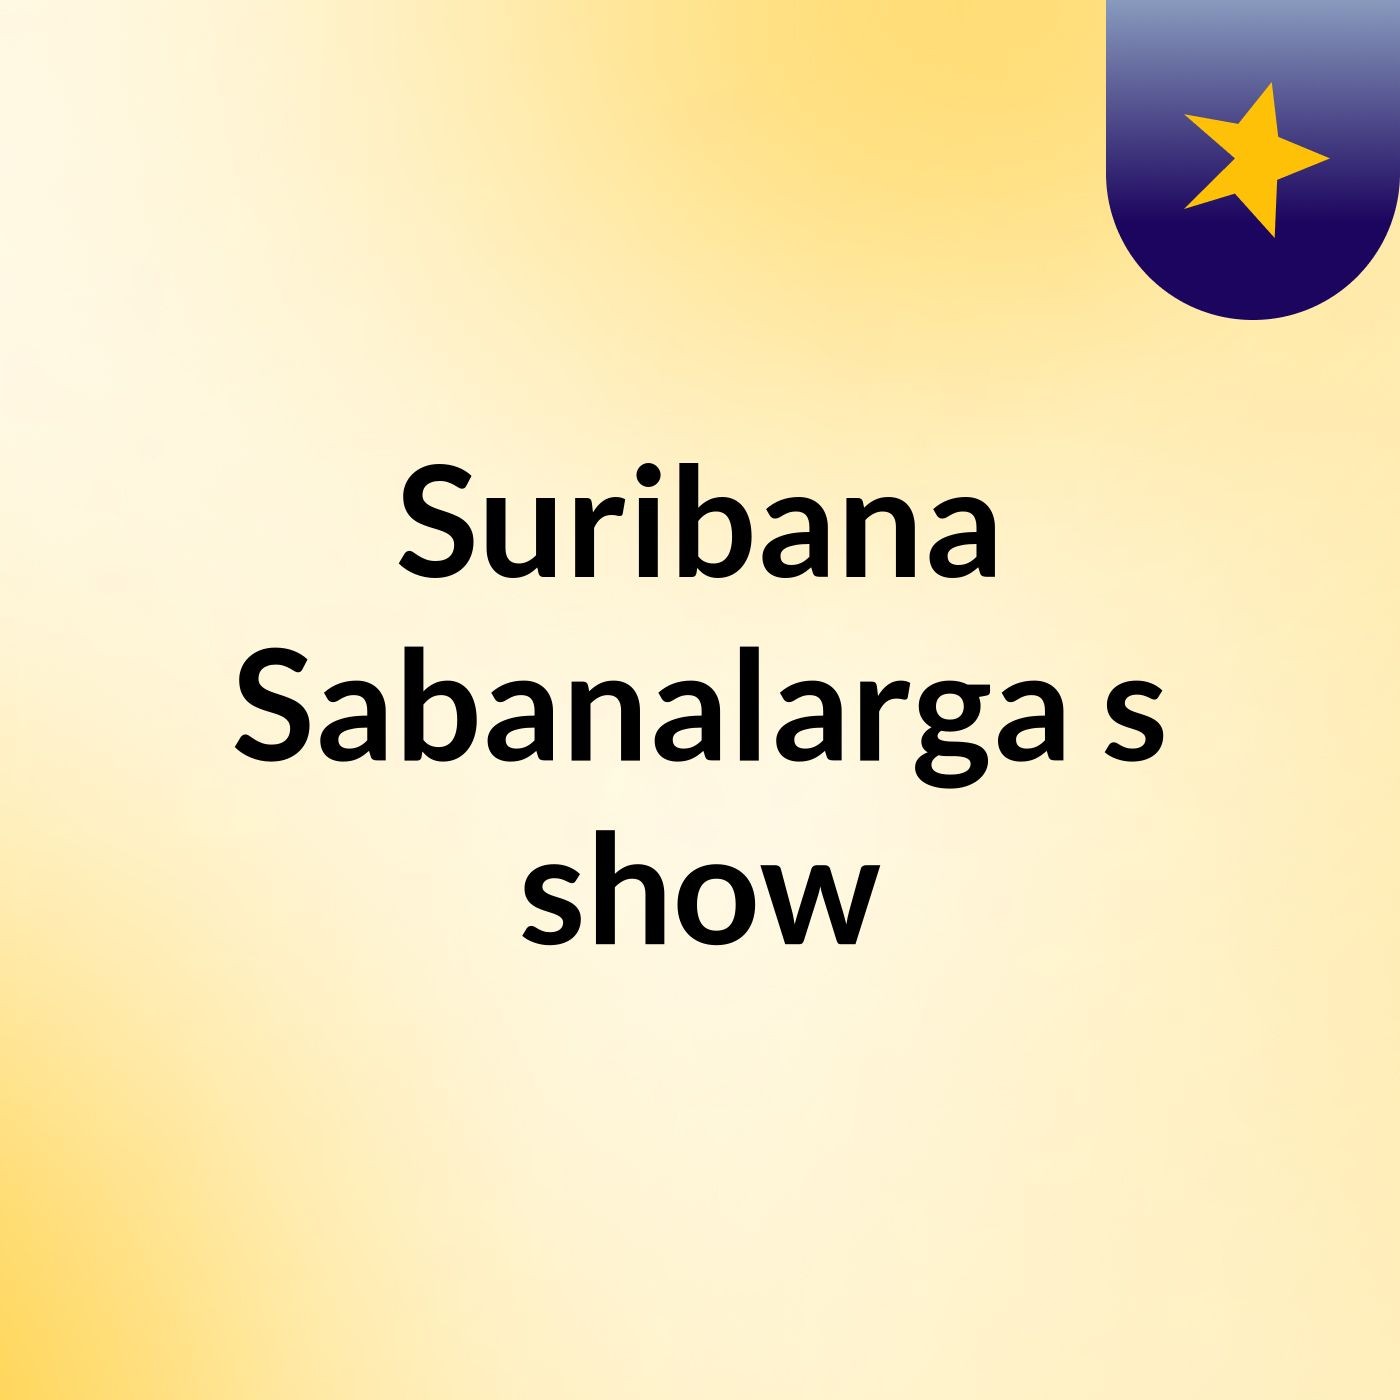 Suribana Sabanalarga's show